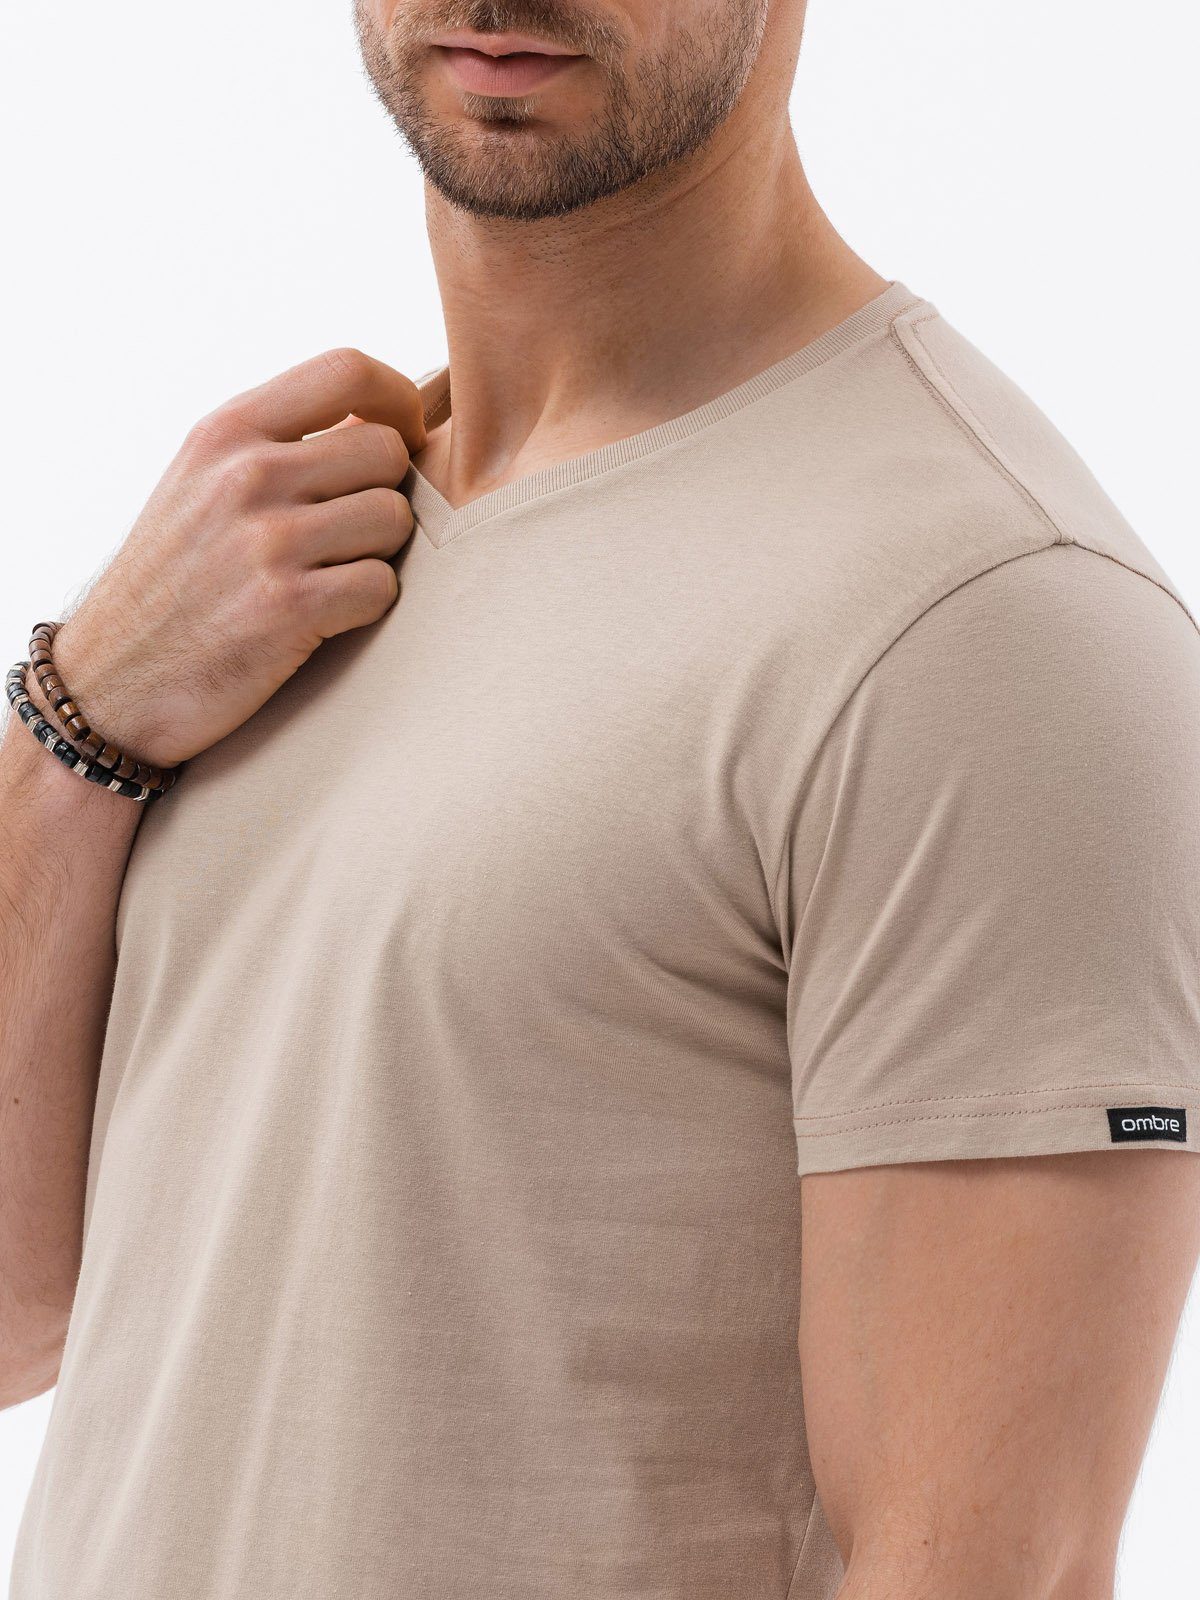 grau OMBRE sand - V-Ausschnitt mit Herren-T-Shirt T-Shirt XXL BASIC S1369 V5